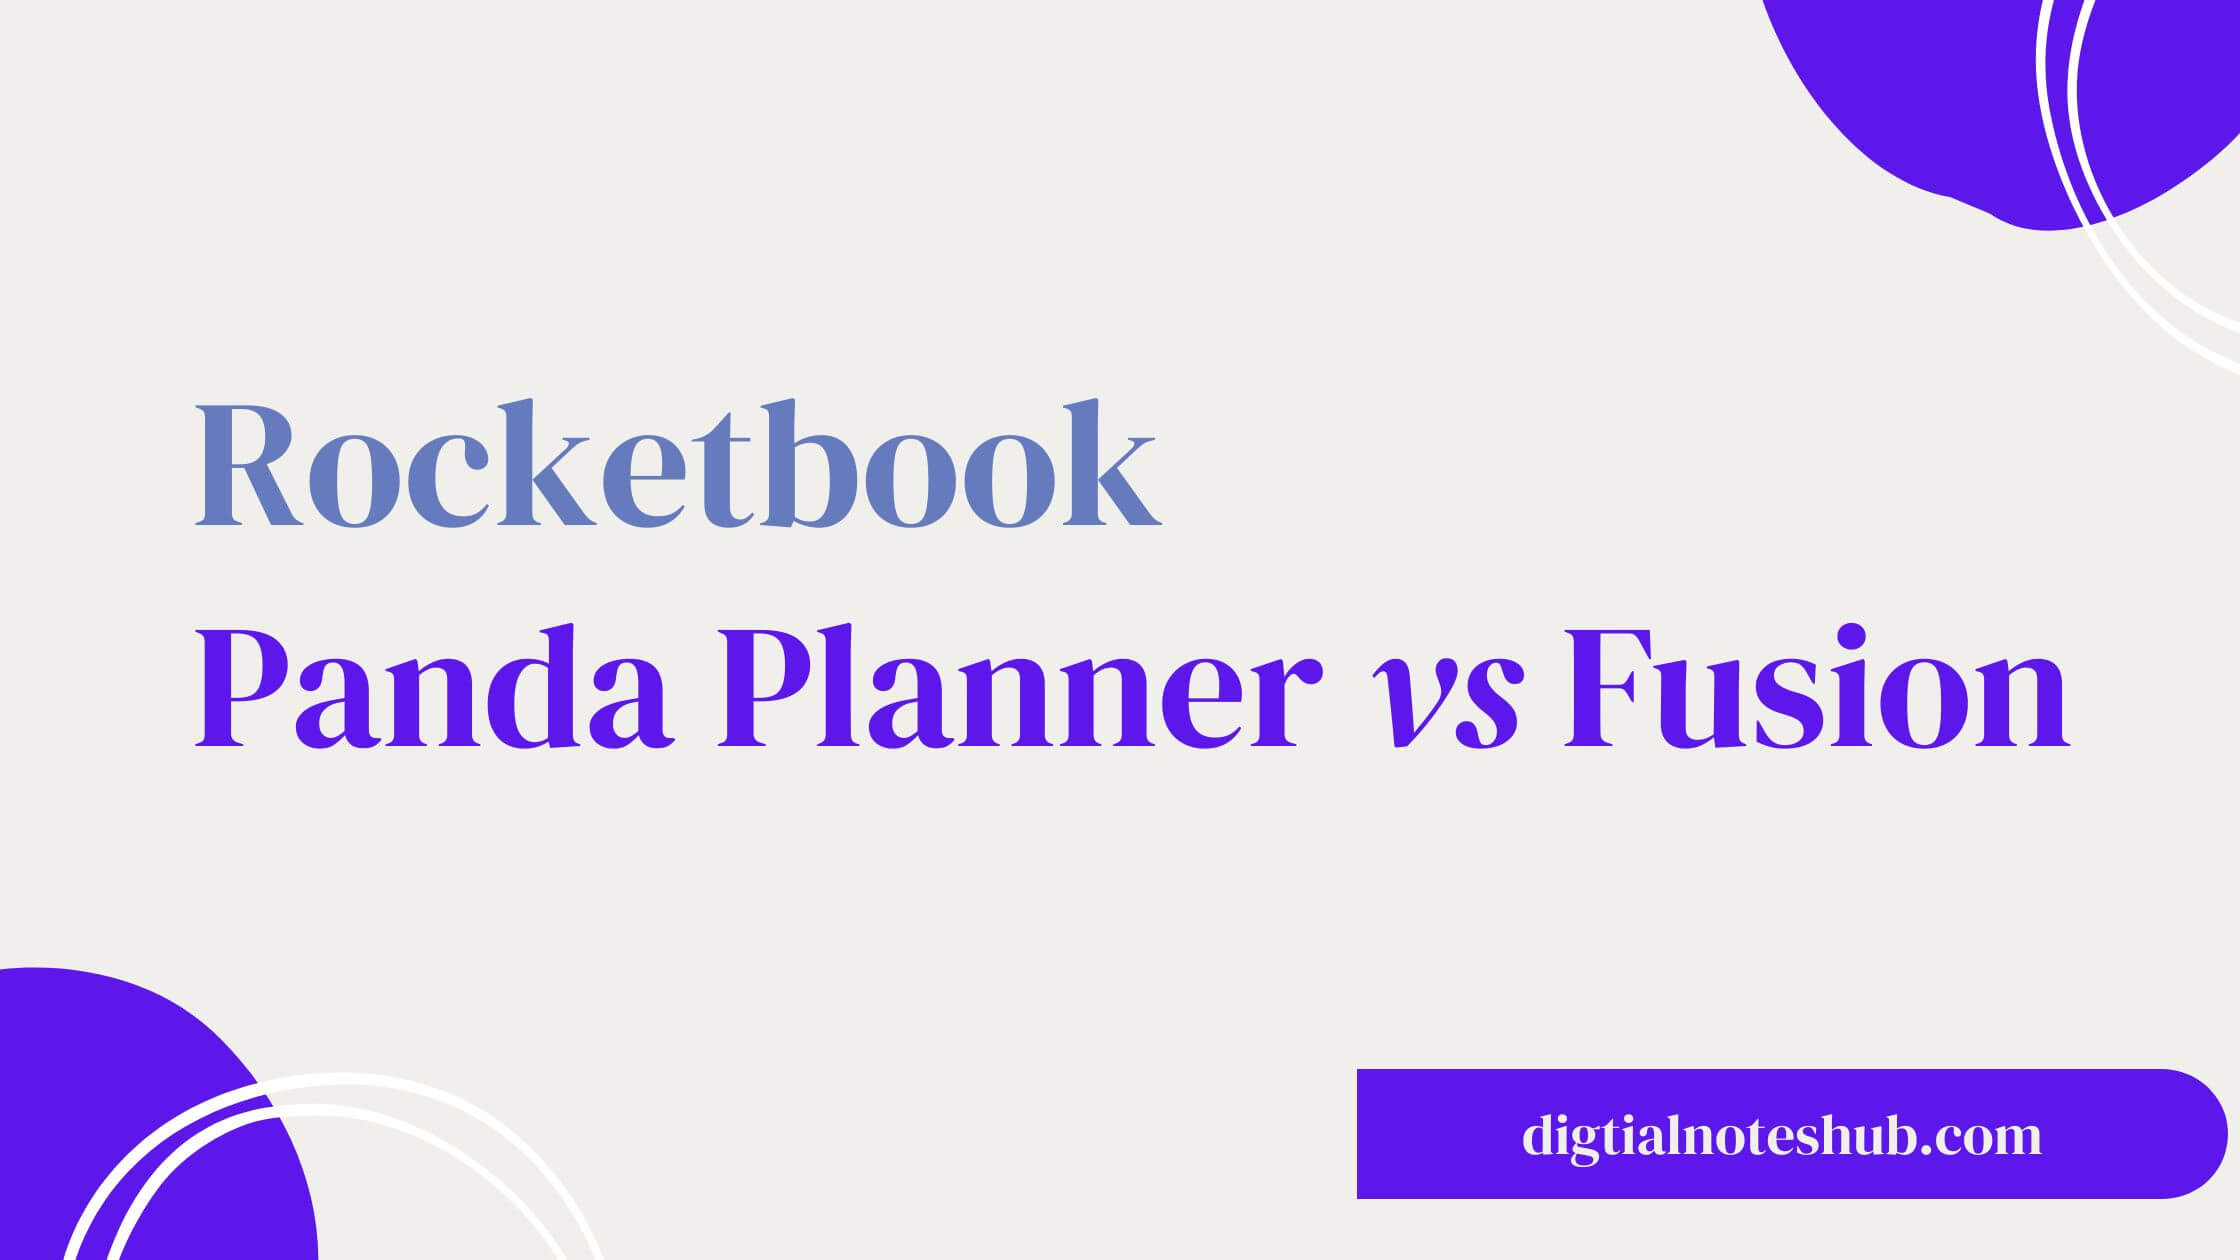 Rocketbook panda planner vs fusion